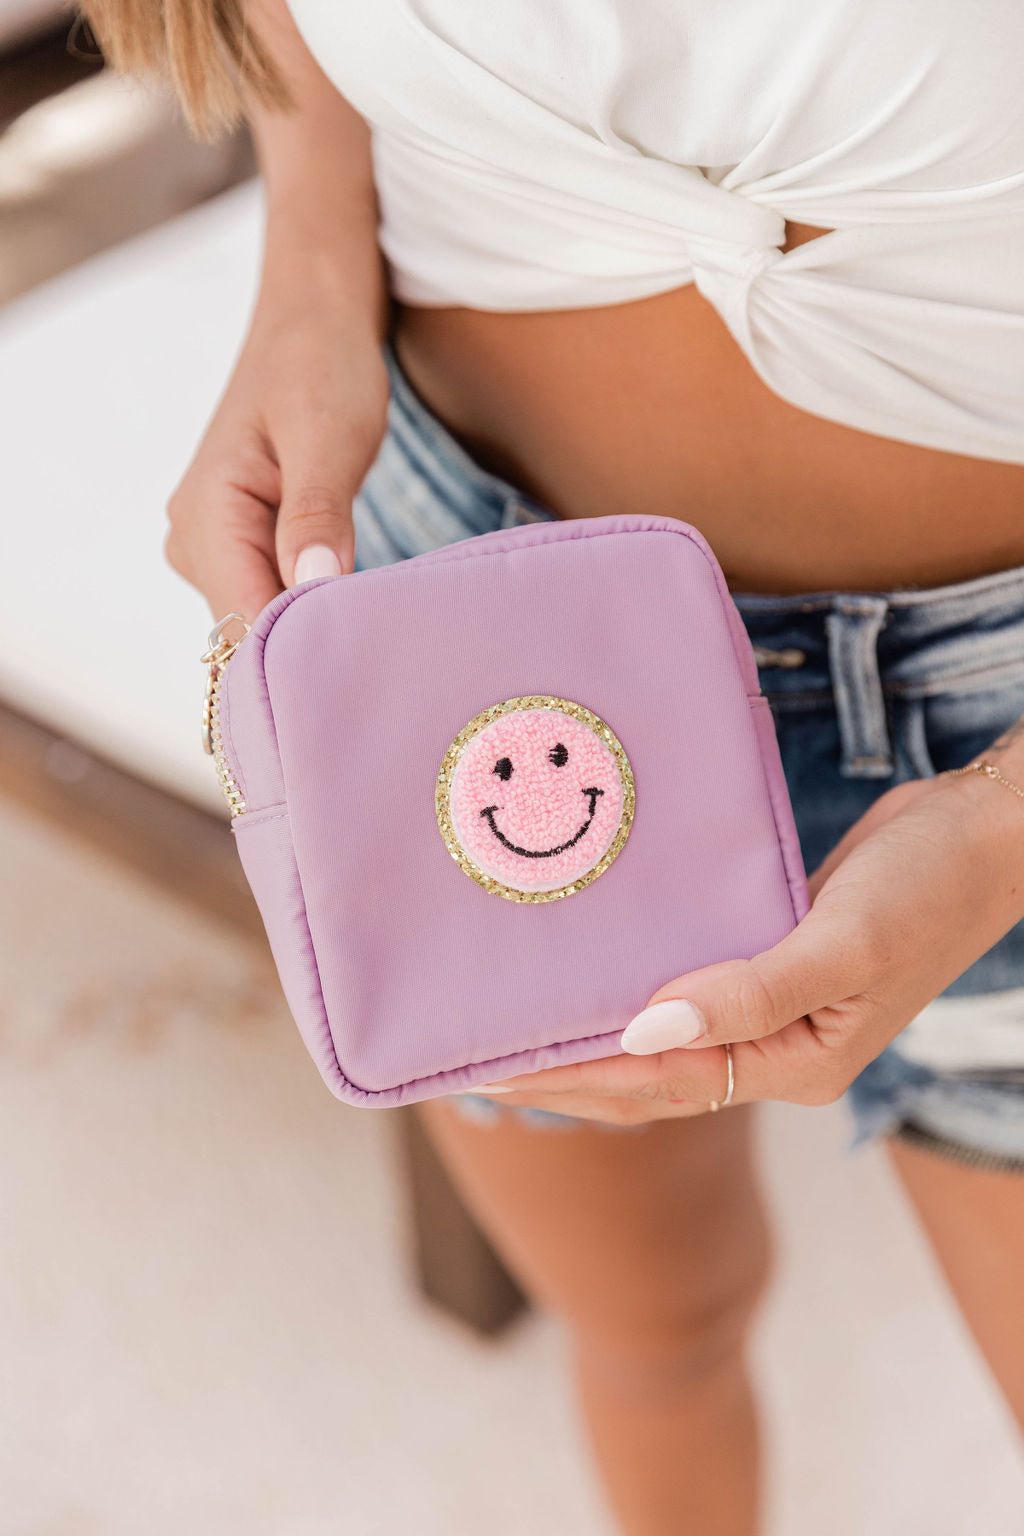 Smiley/Purple Patch Mini Travel Medicine Bag shopify LILYELF